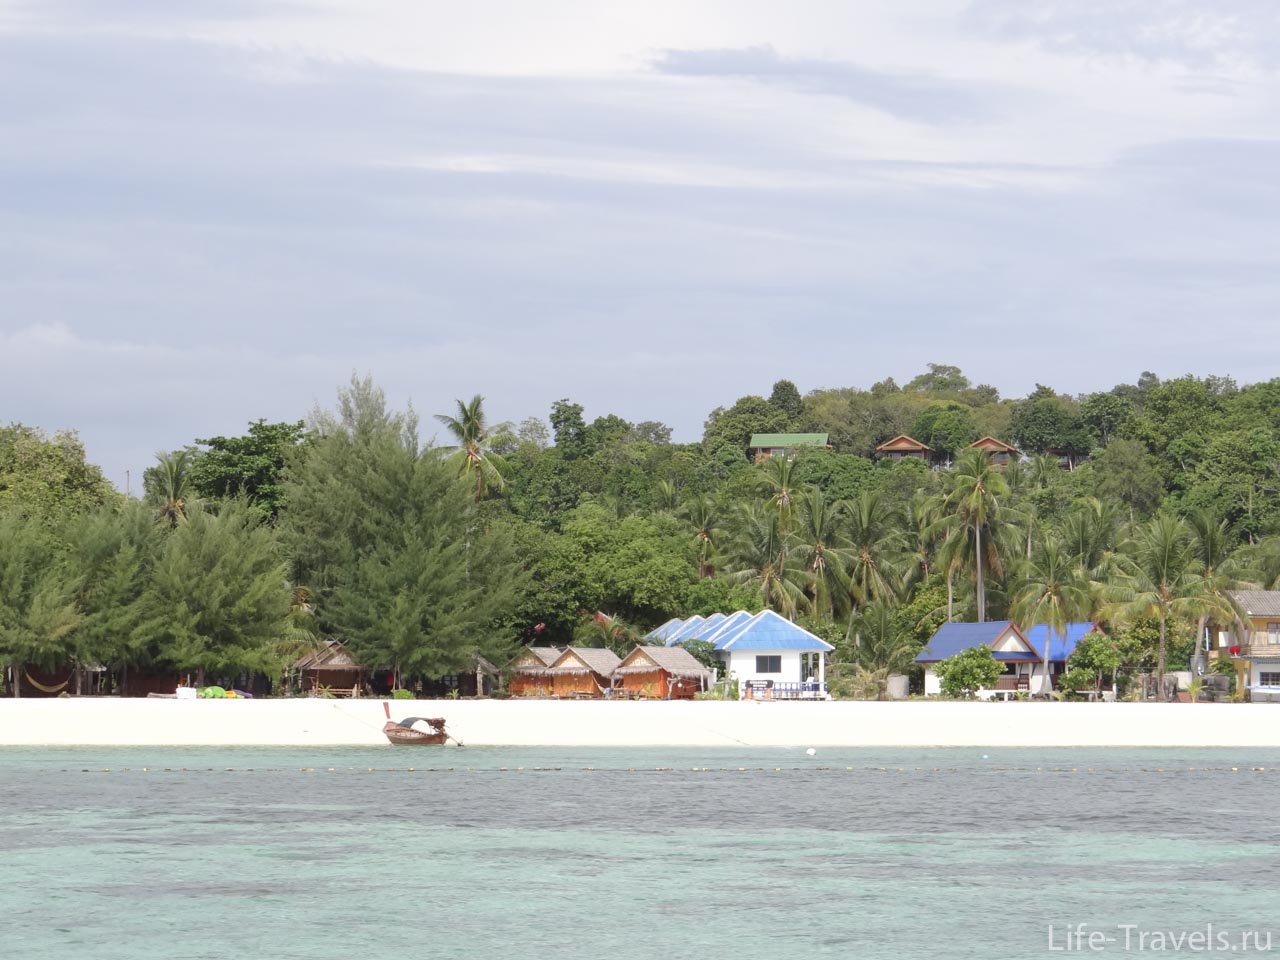 Inhabited island of the Andaman Sea